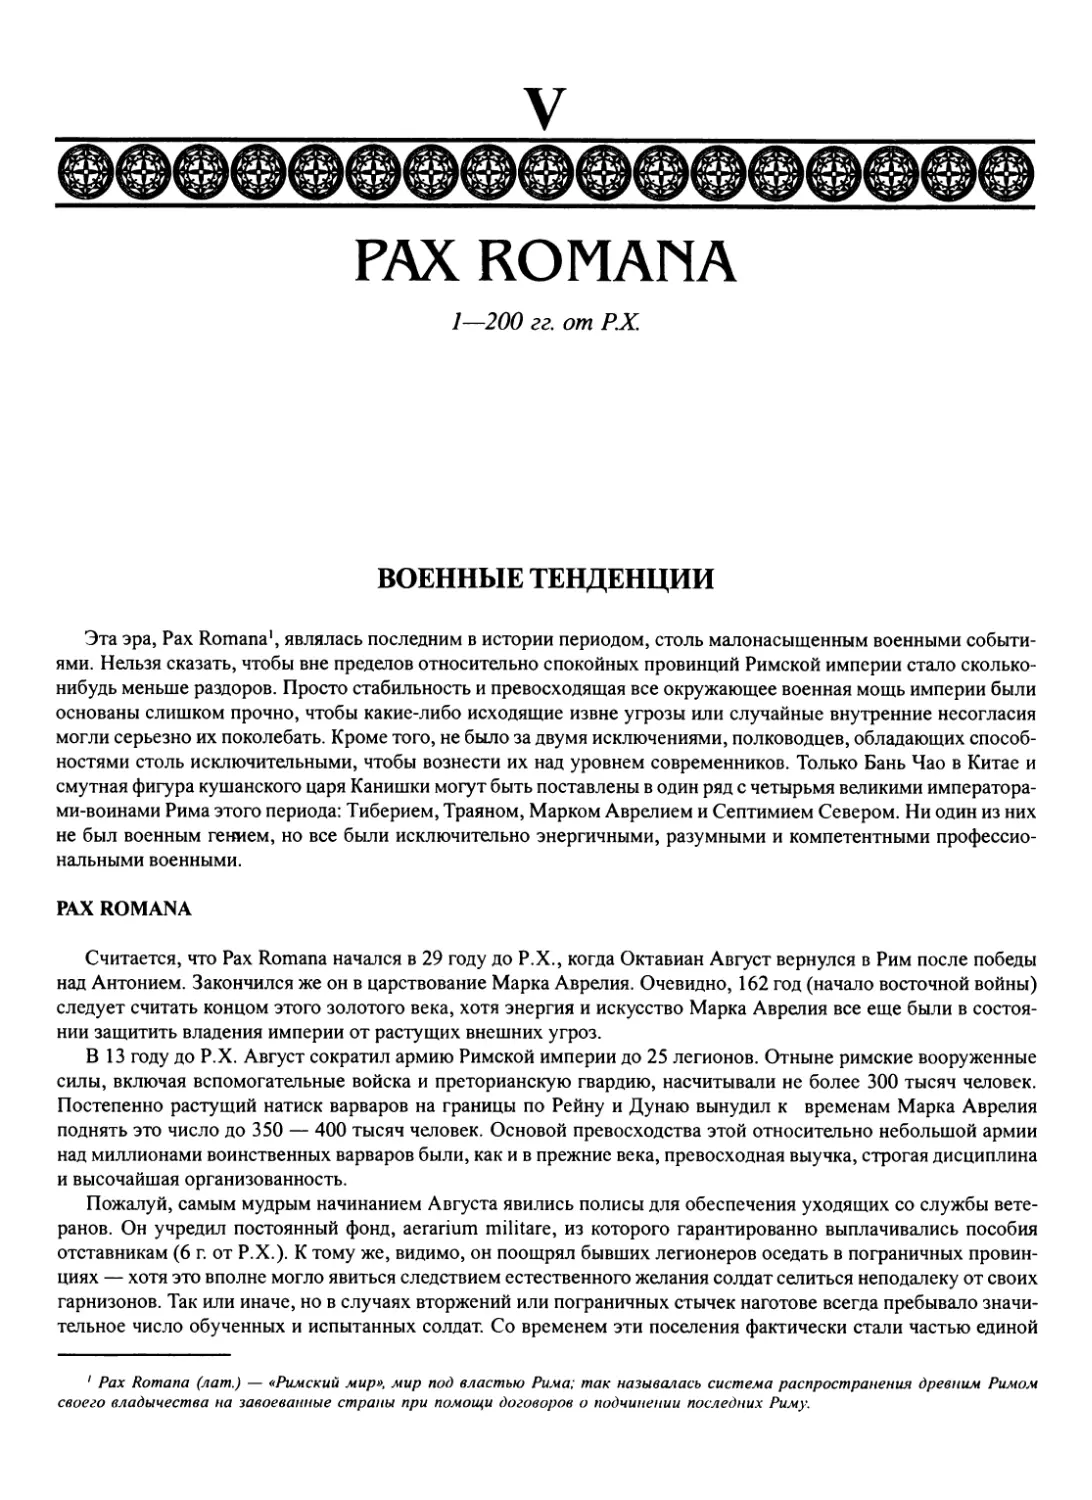 V PAX ROMANA. 1—200 гг. от Р.Х